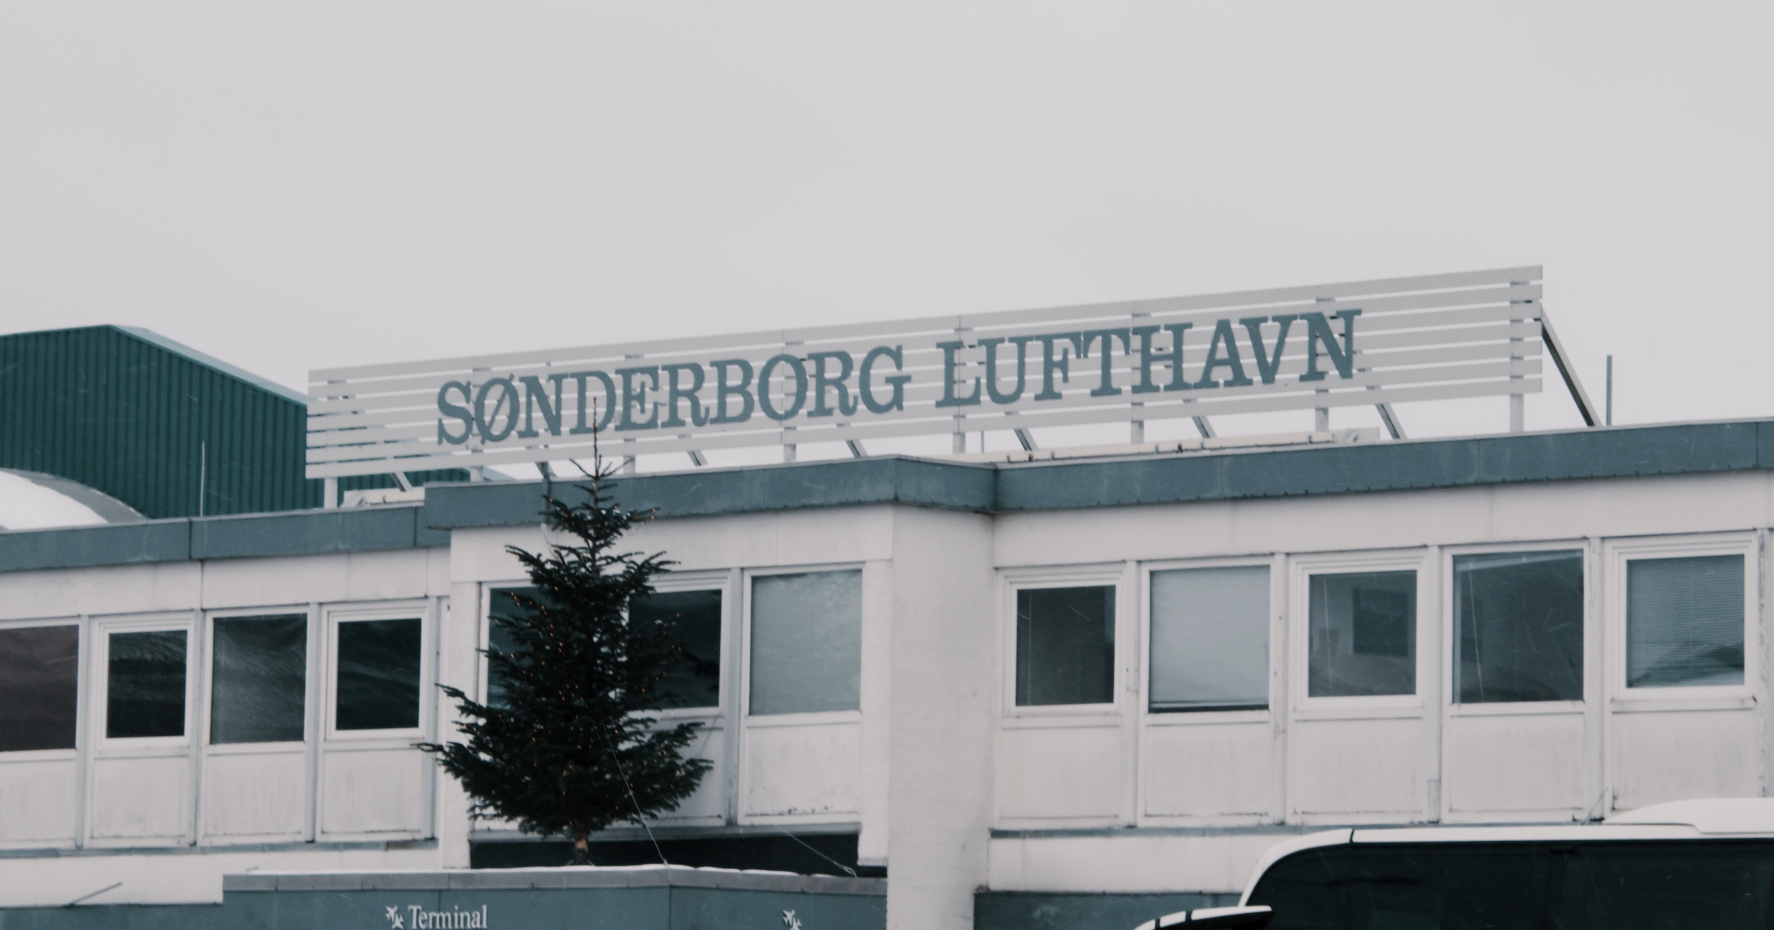 Sønderborg lufthavn